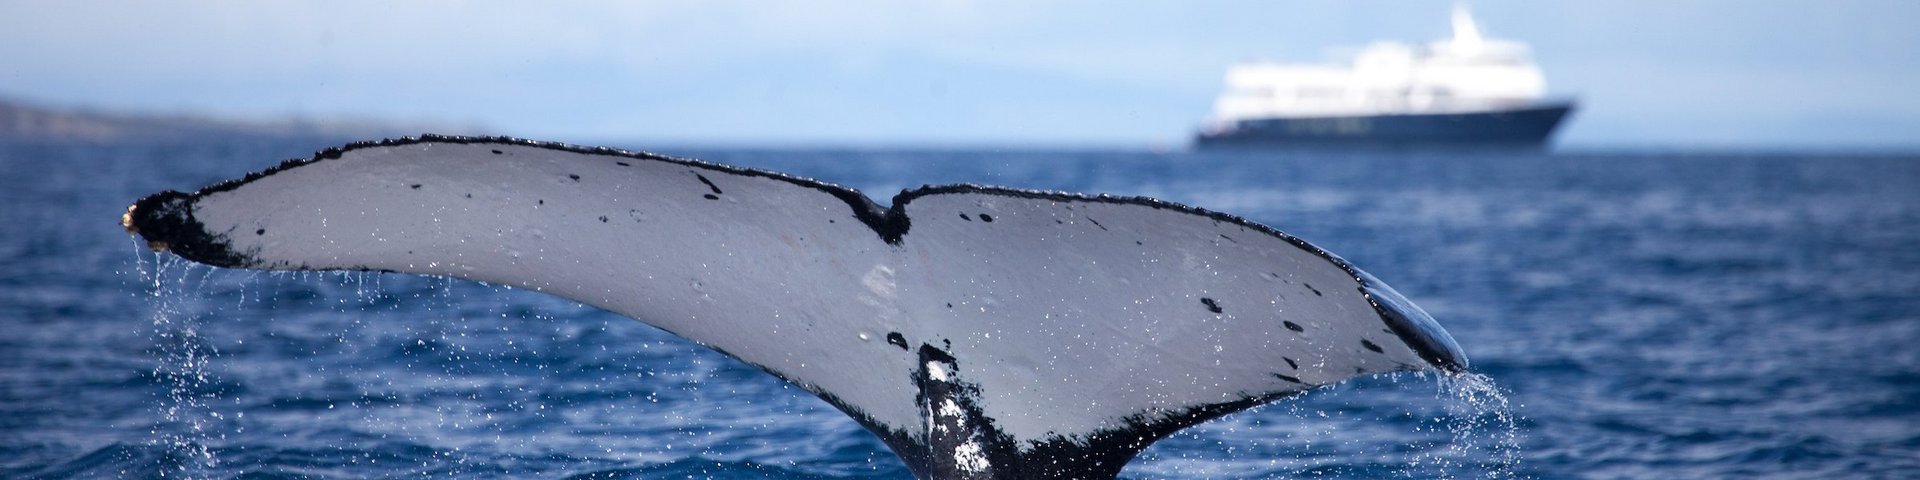 Walflosse vor der Safari Voyager